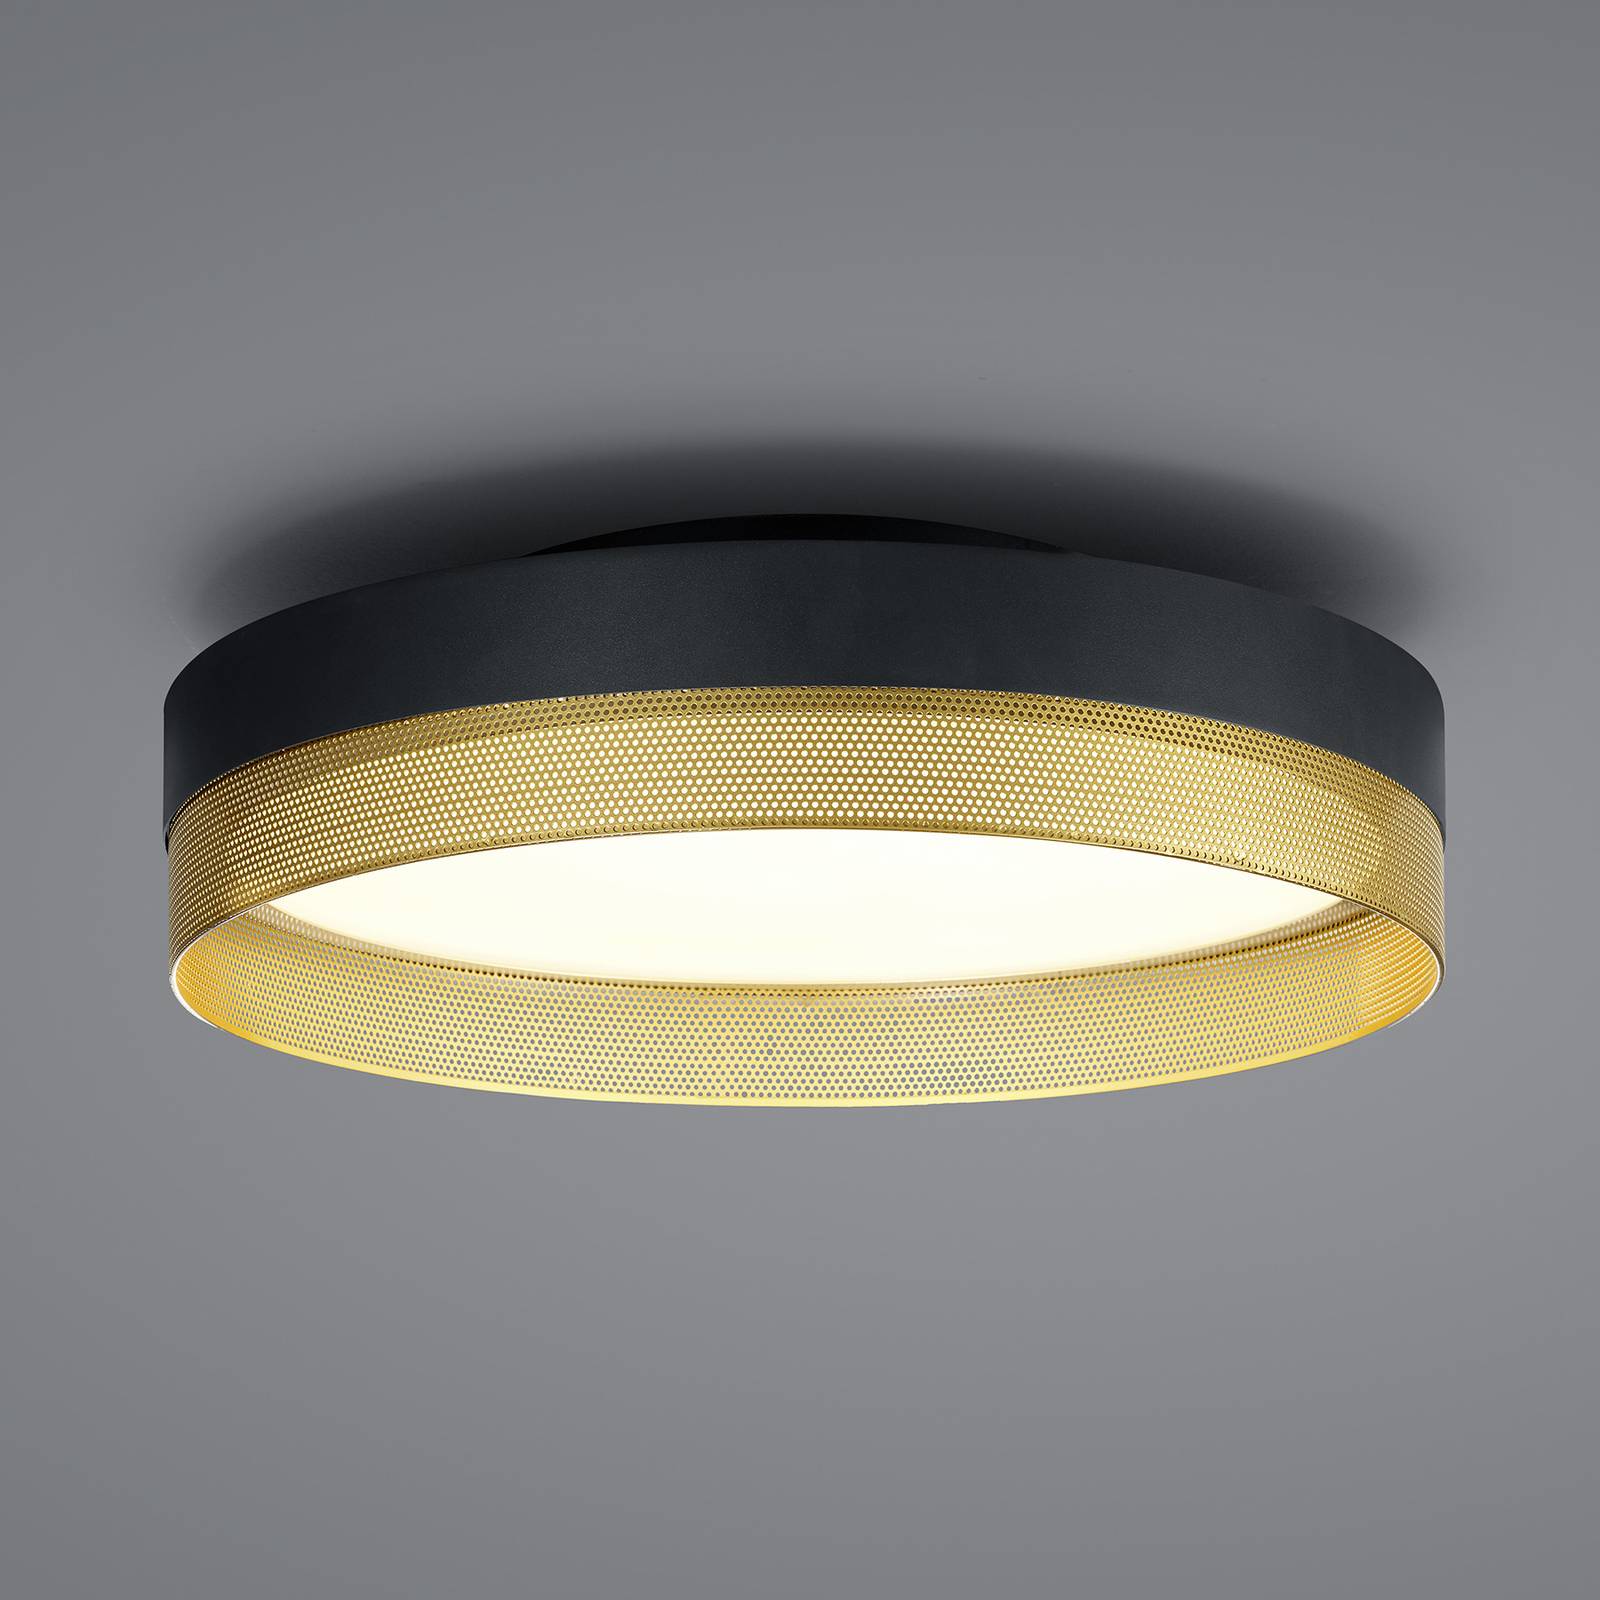 Sieťové stropné svietidlo LED, Ø 45 cm, čierna/zlatá